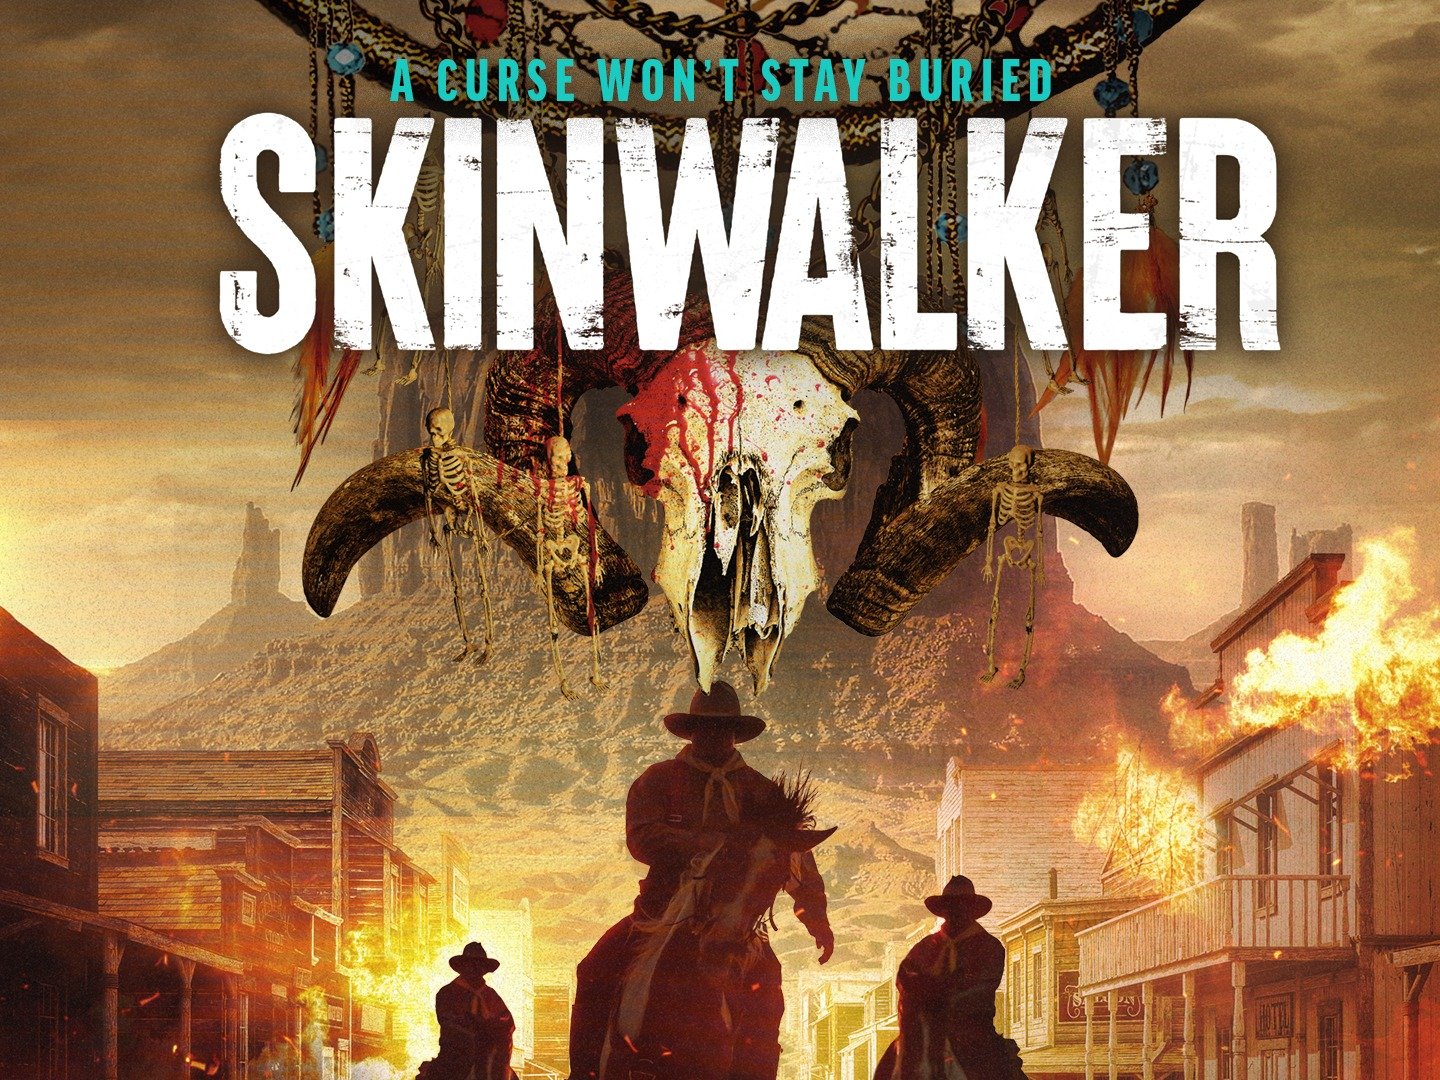 Skinwalker Trailer 1 Trailers & Videos Rotten Tomatoes